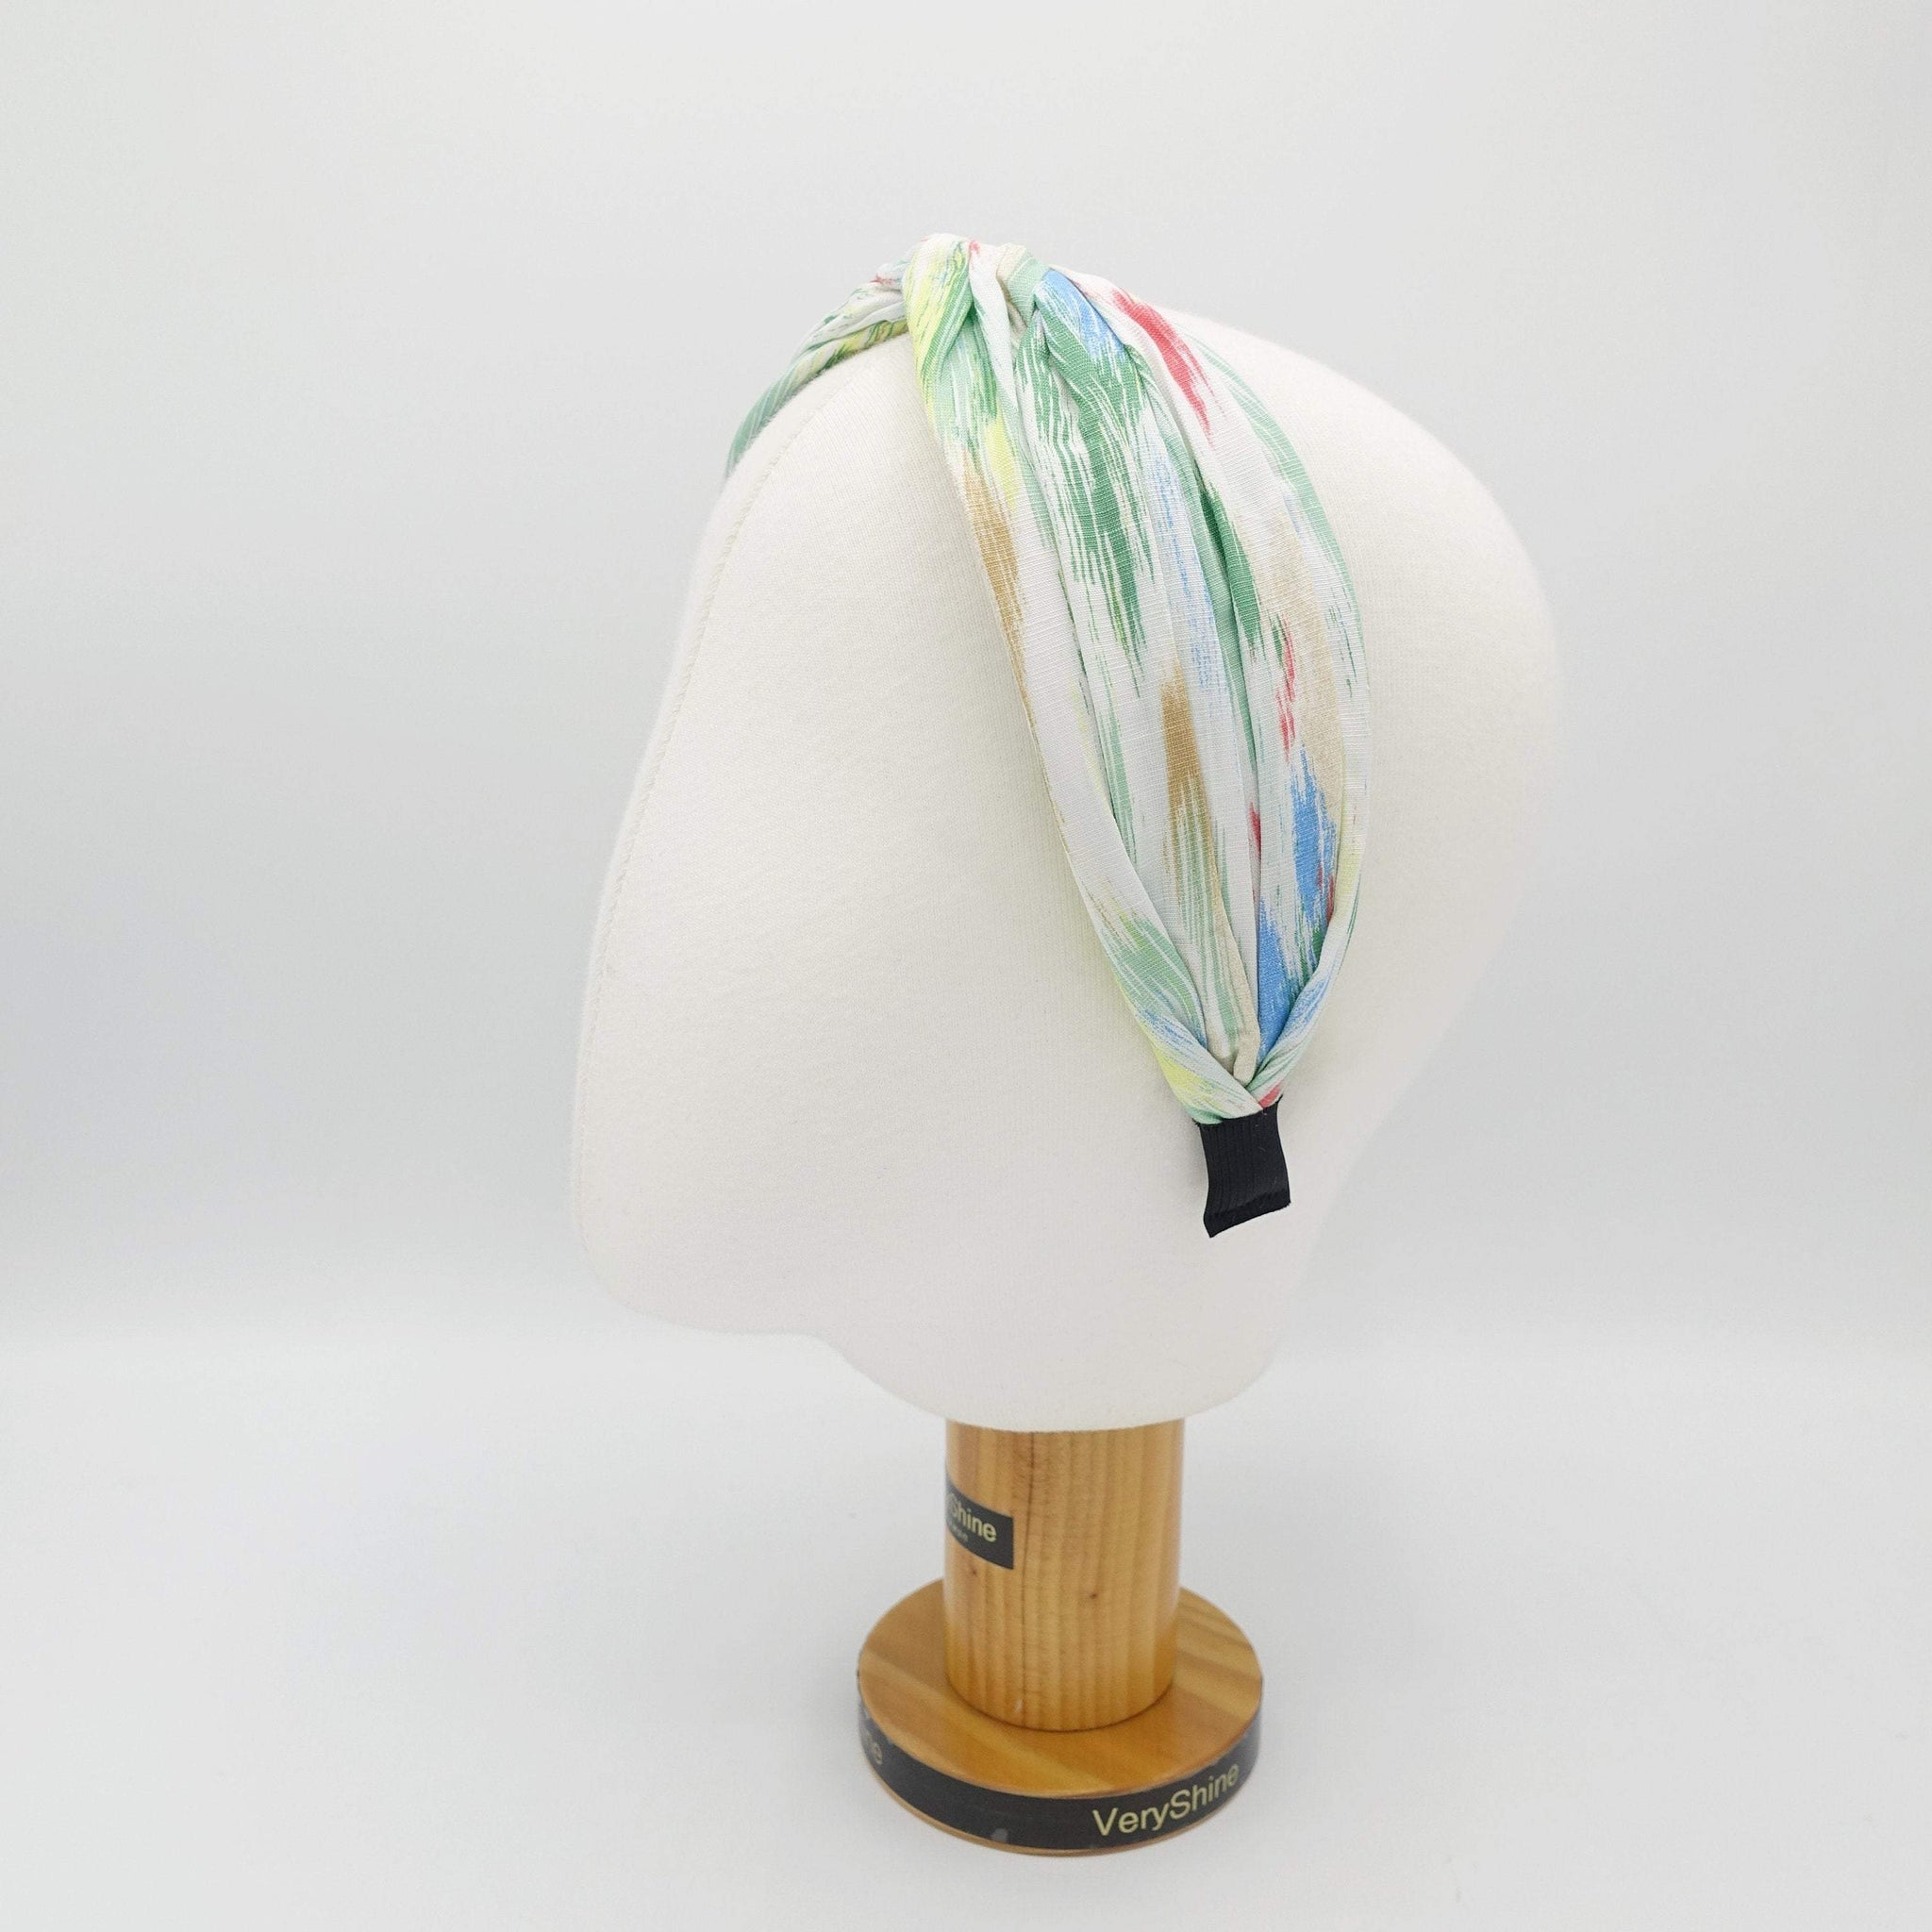 VeryShine Headband color stroke print headband cross hairband Summer hair accessory for women